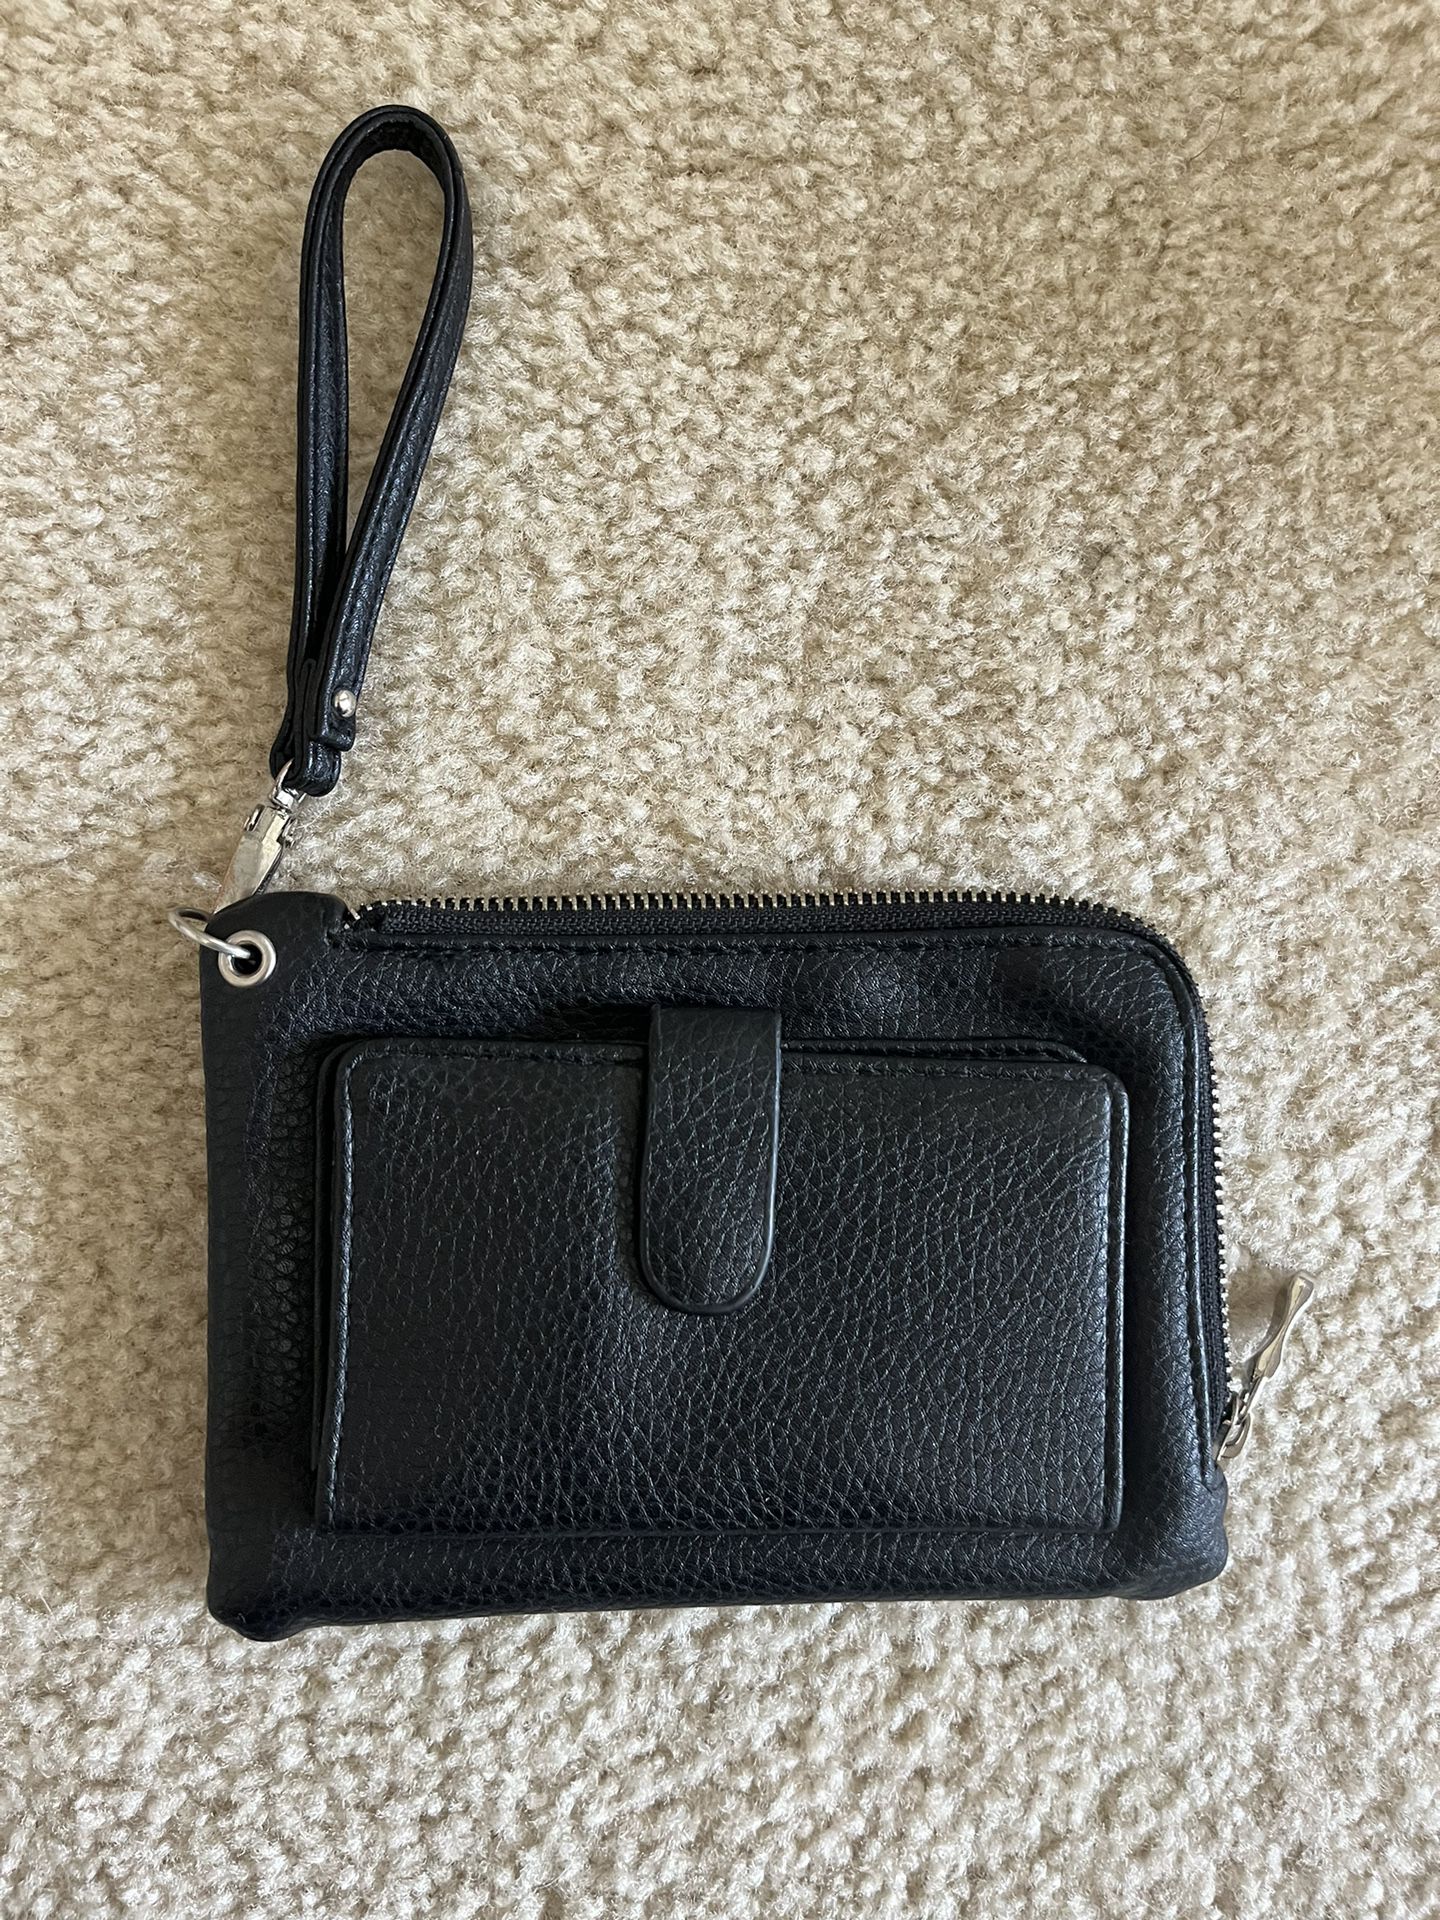 Black Wristlet Wallet $15